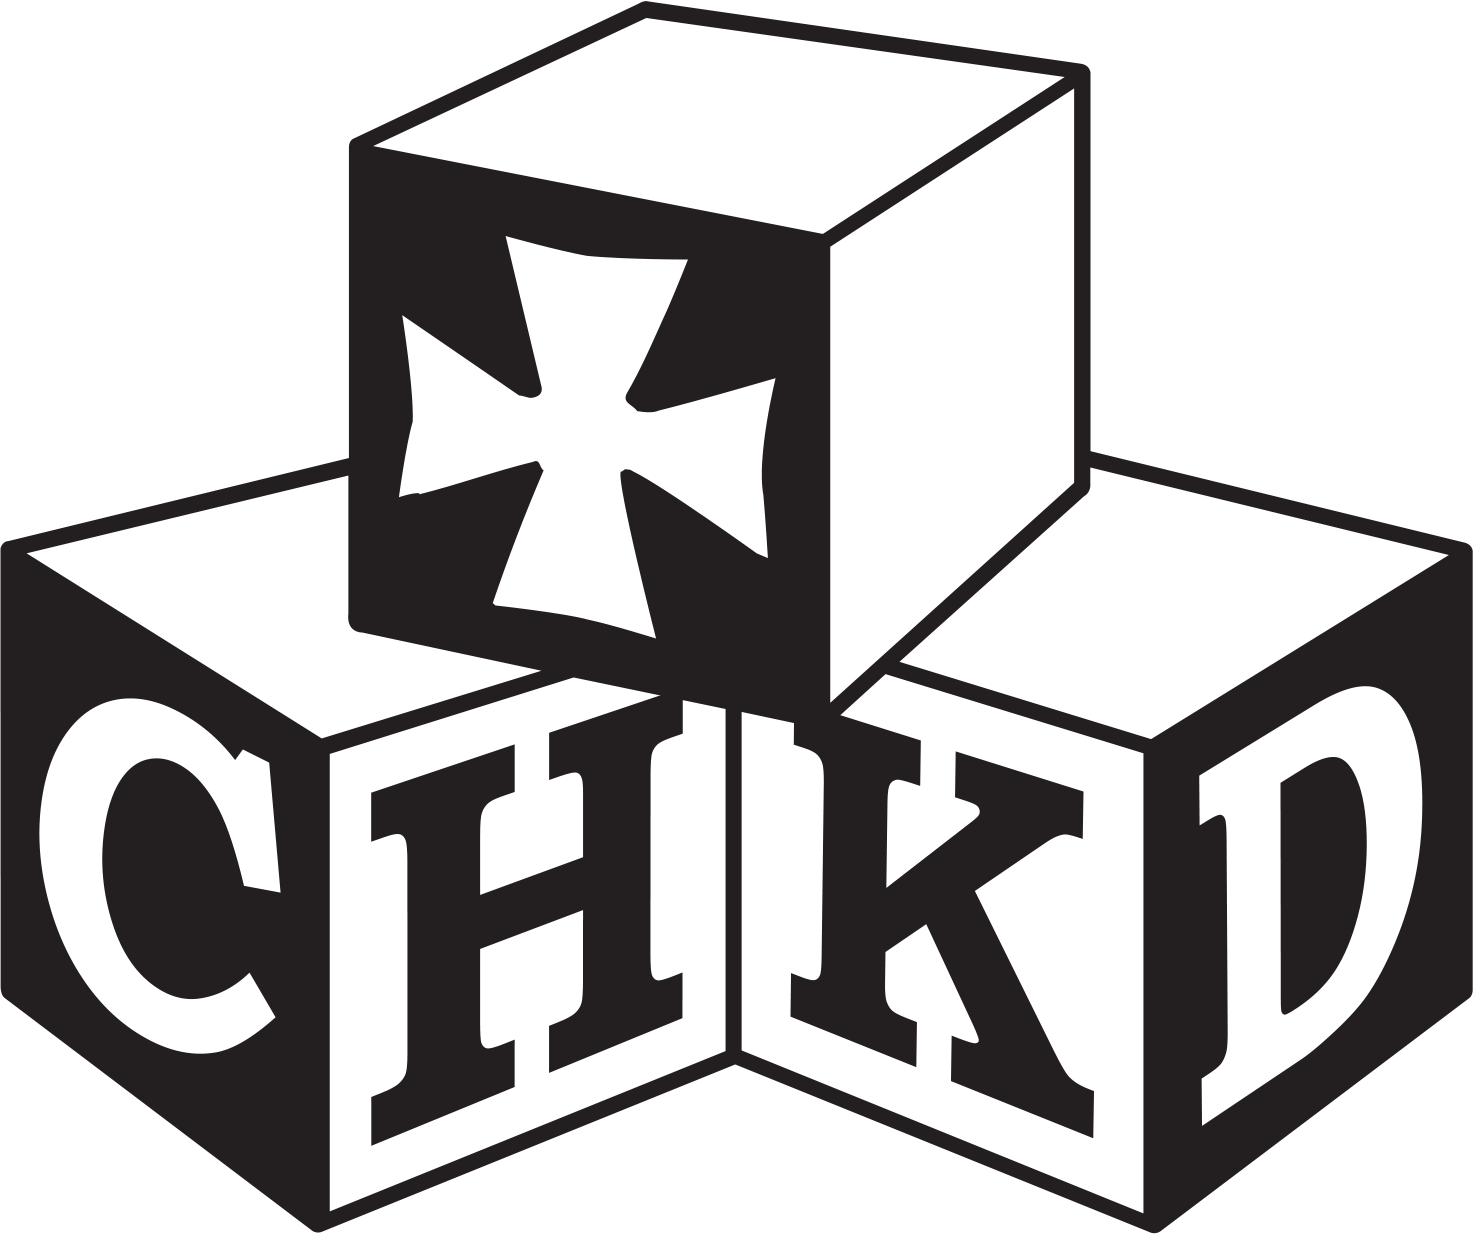 CHKD logo